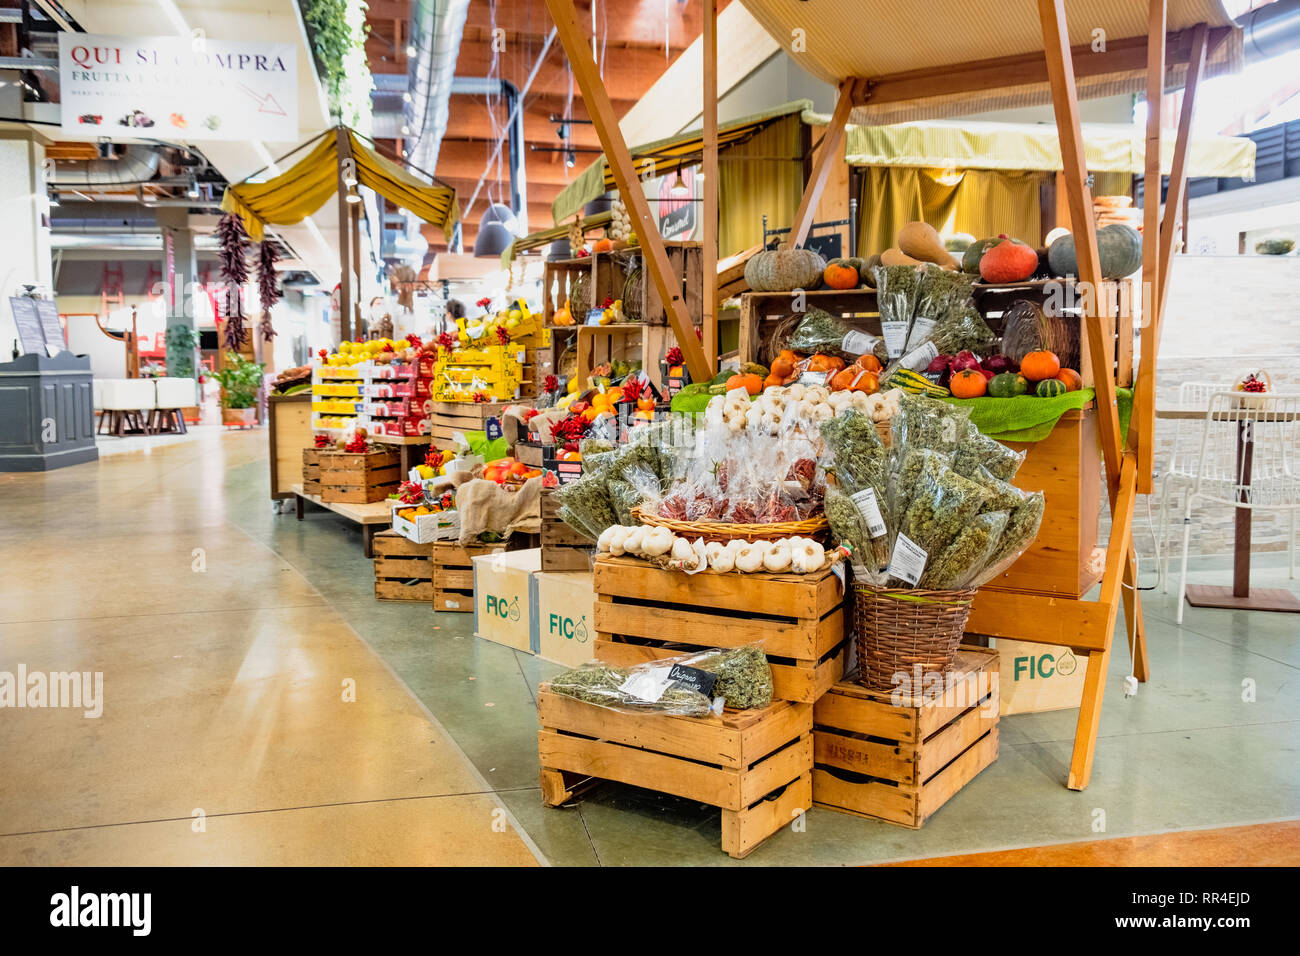 fruit vegetable market stall Fico Eataly World  - Bologna - Italy Stock Photo